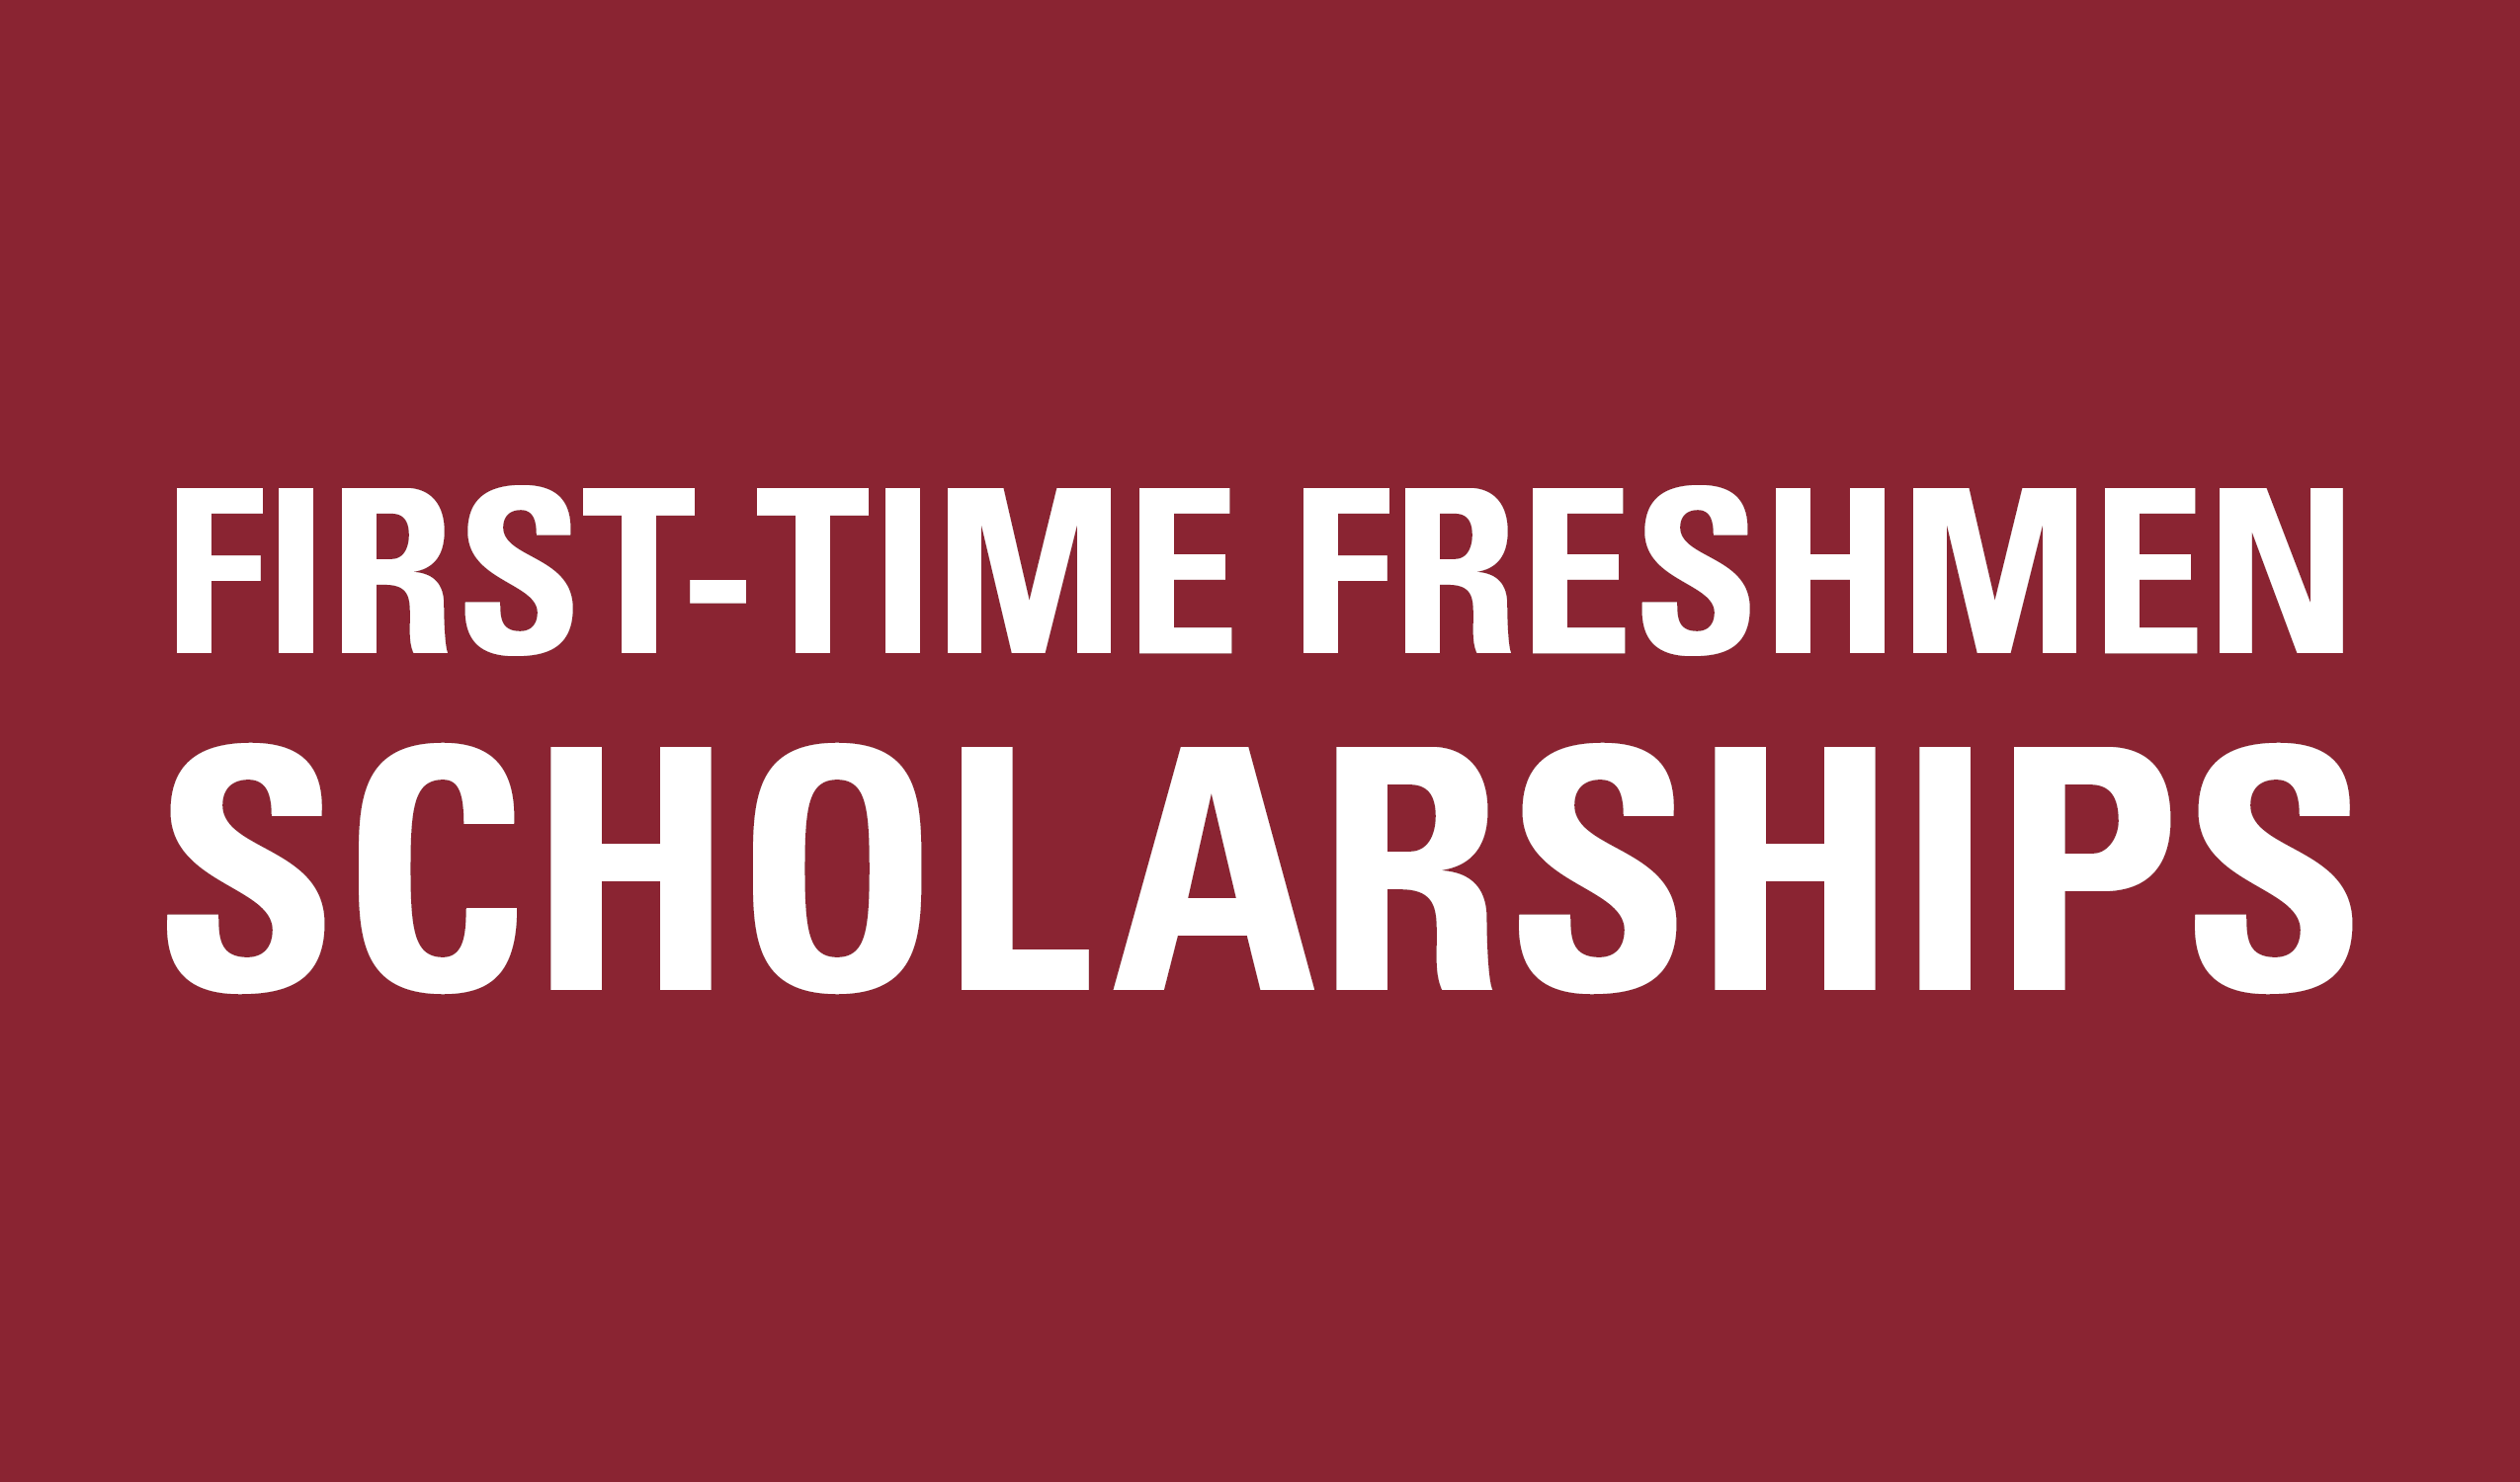 First-Time Freshmen Scholarships